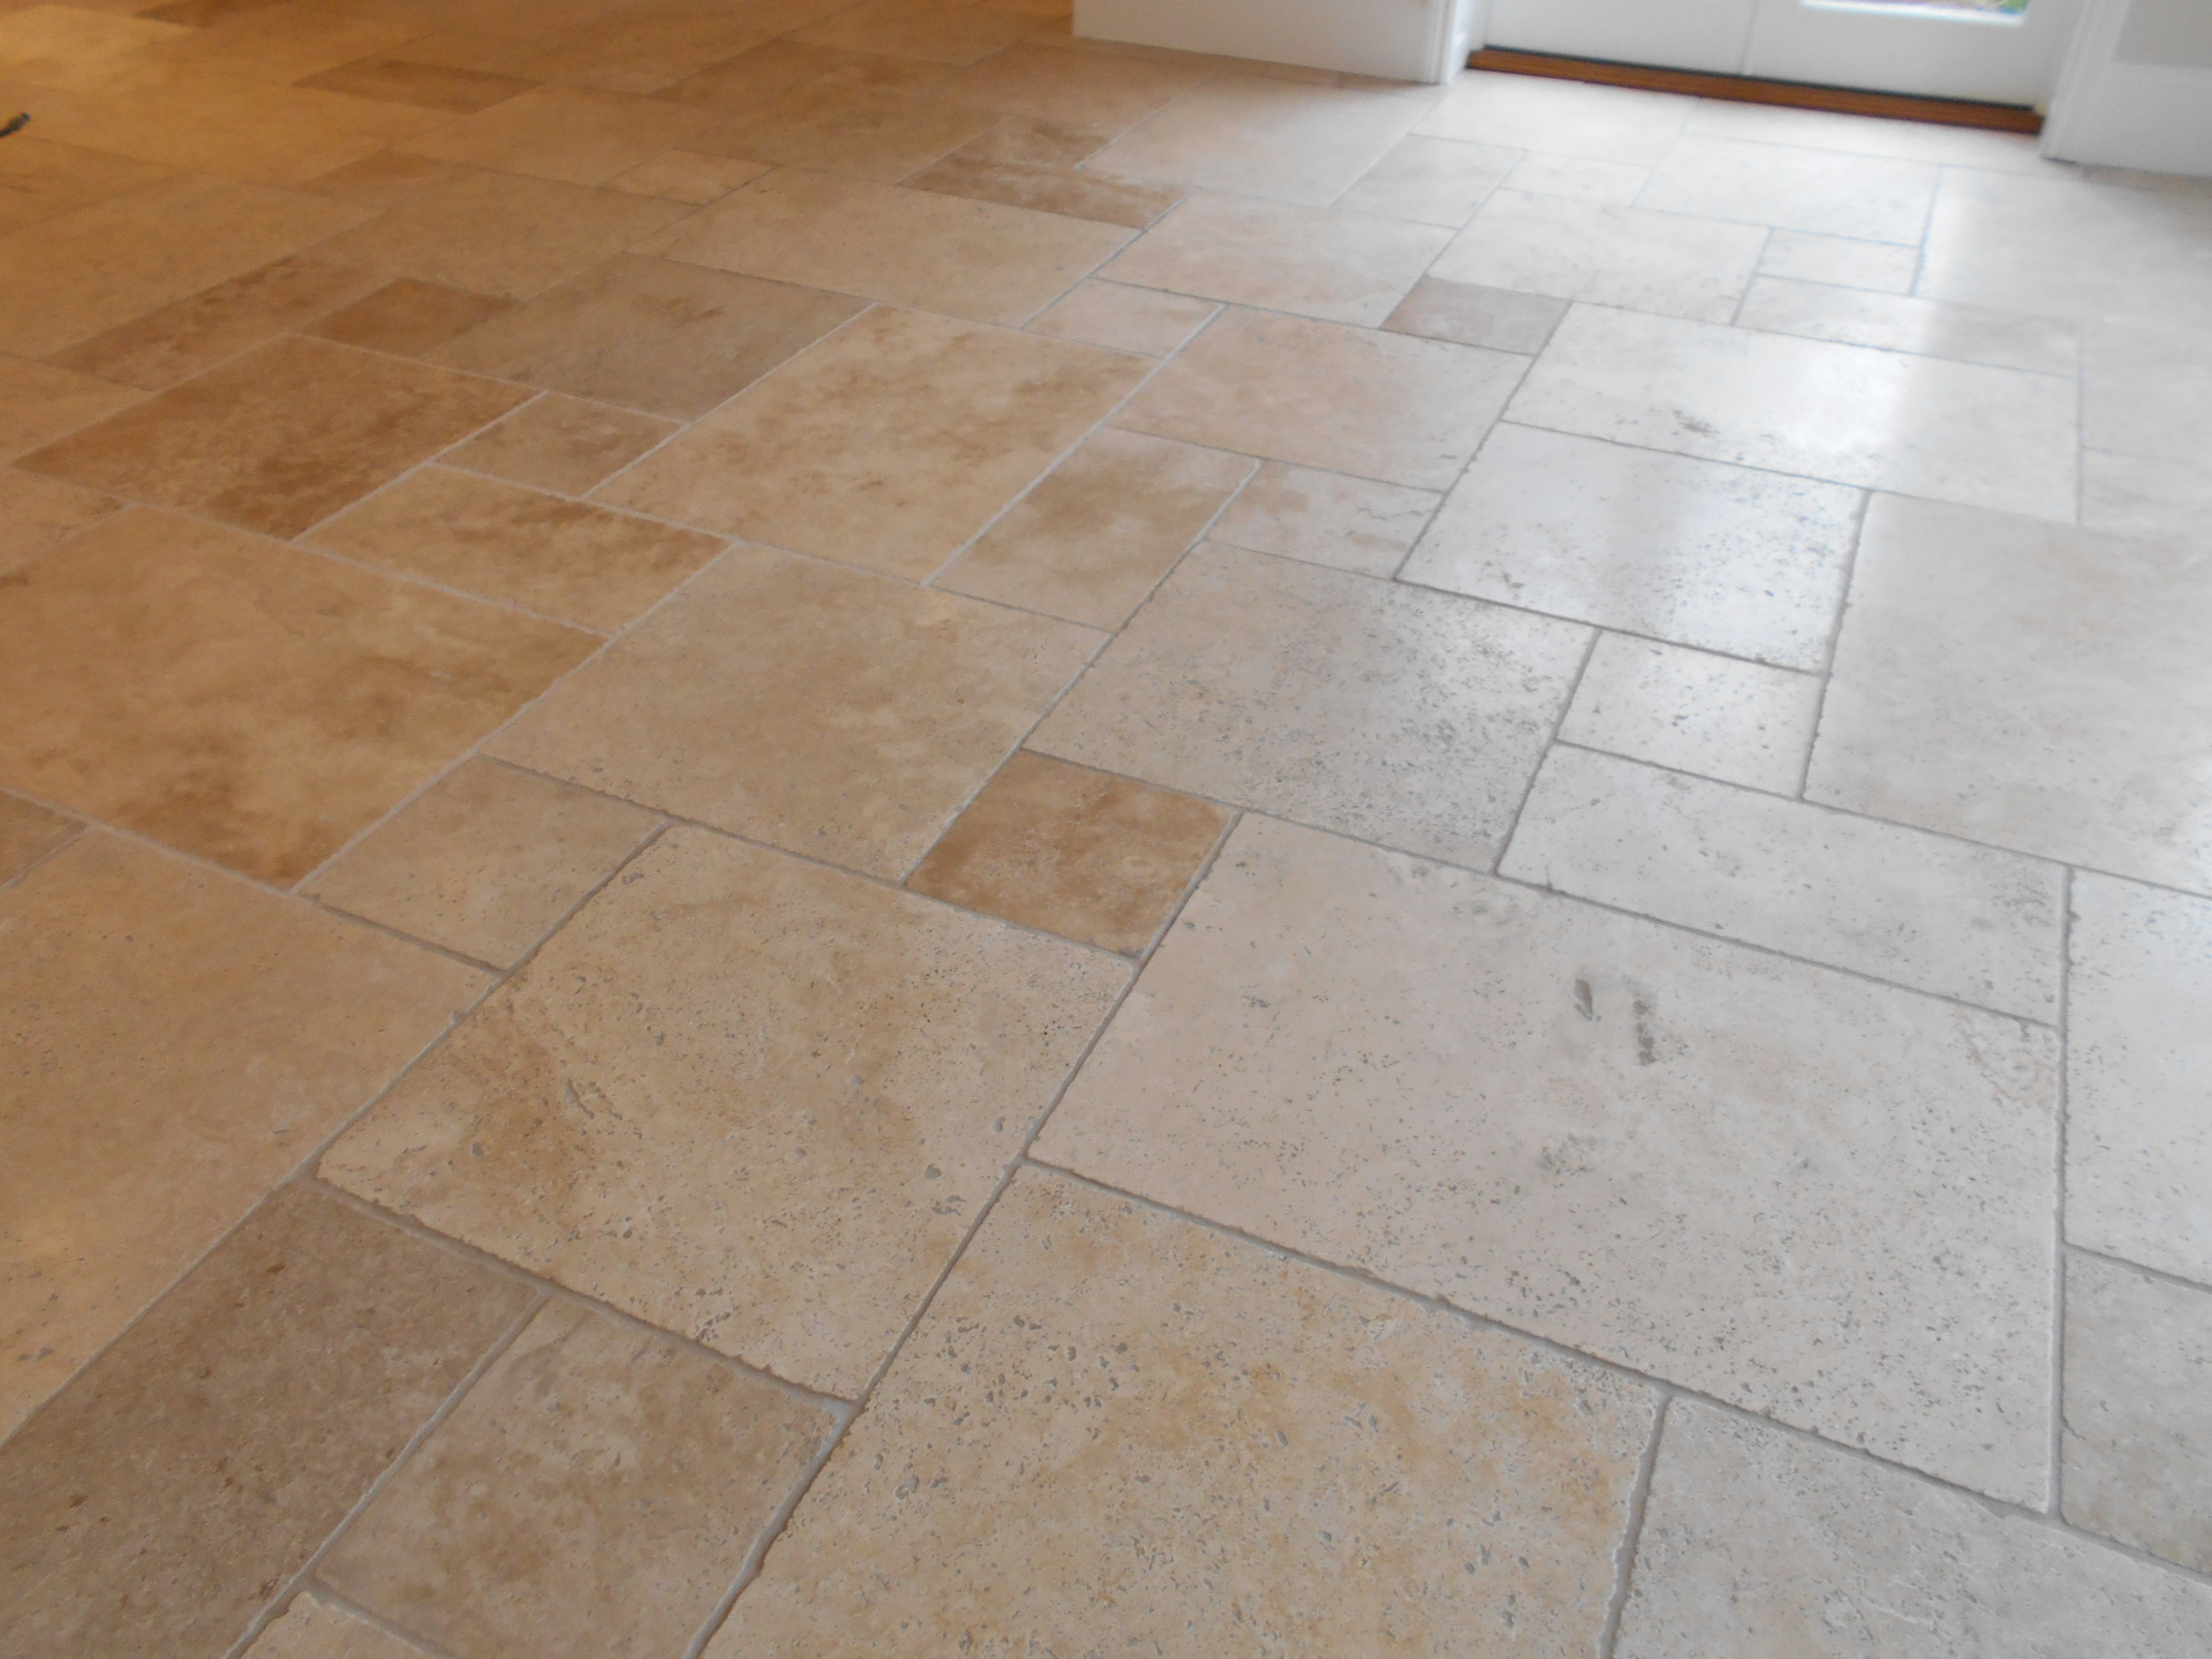 stone patterned tile floor